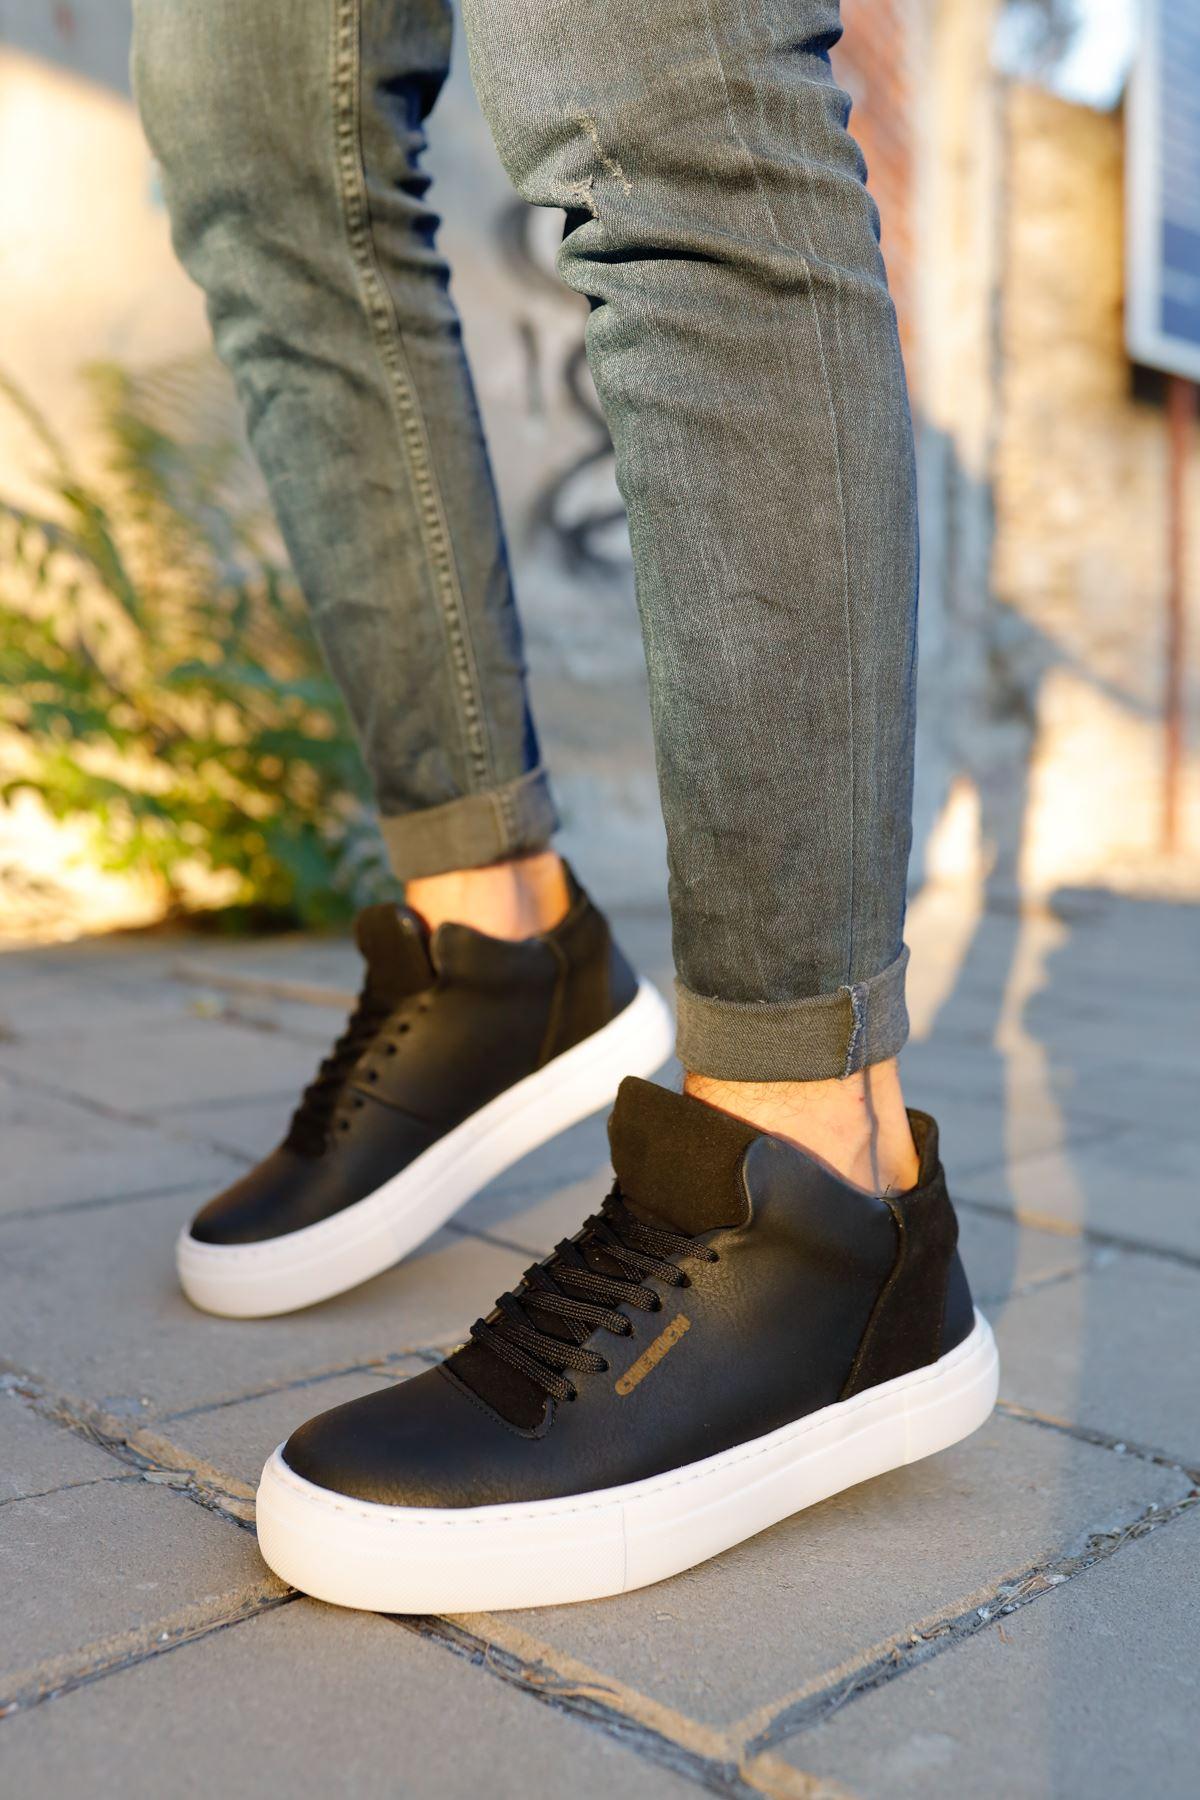 CH003 Men's Black Casual Sneaker Sports Boots - STREET MODE ™